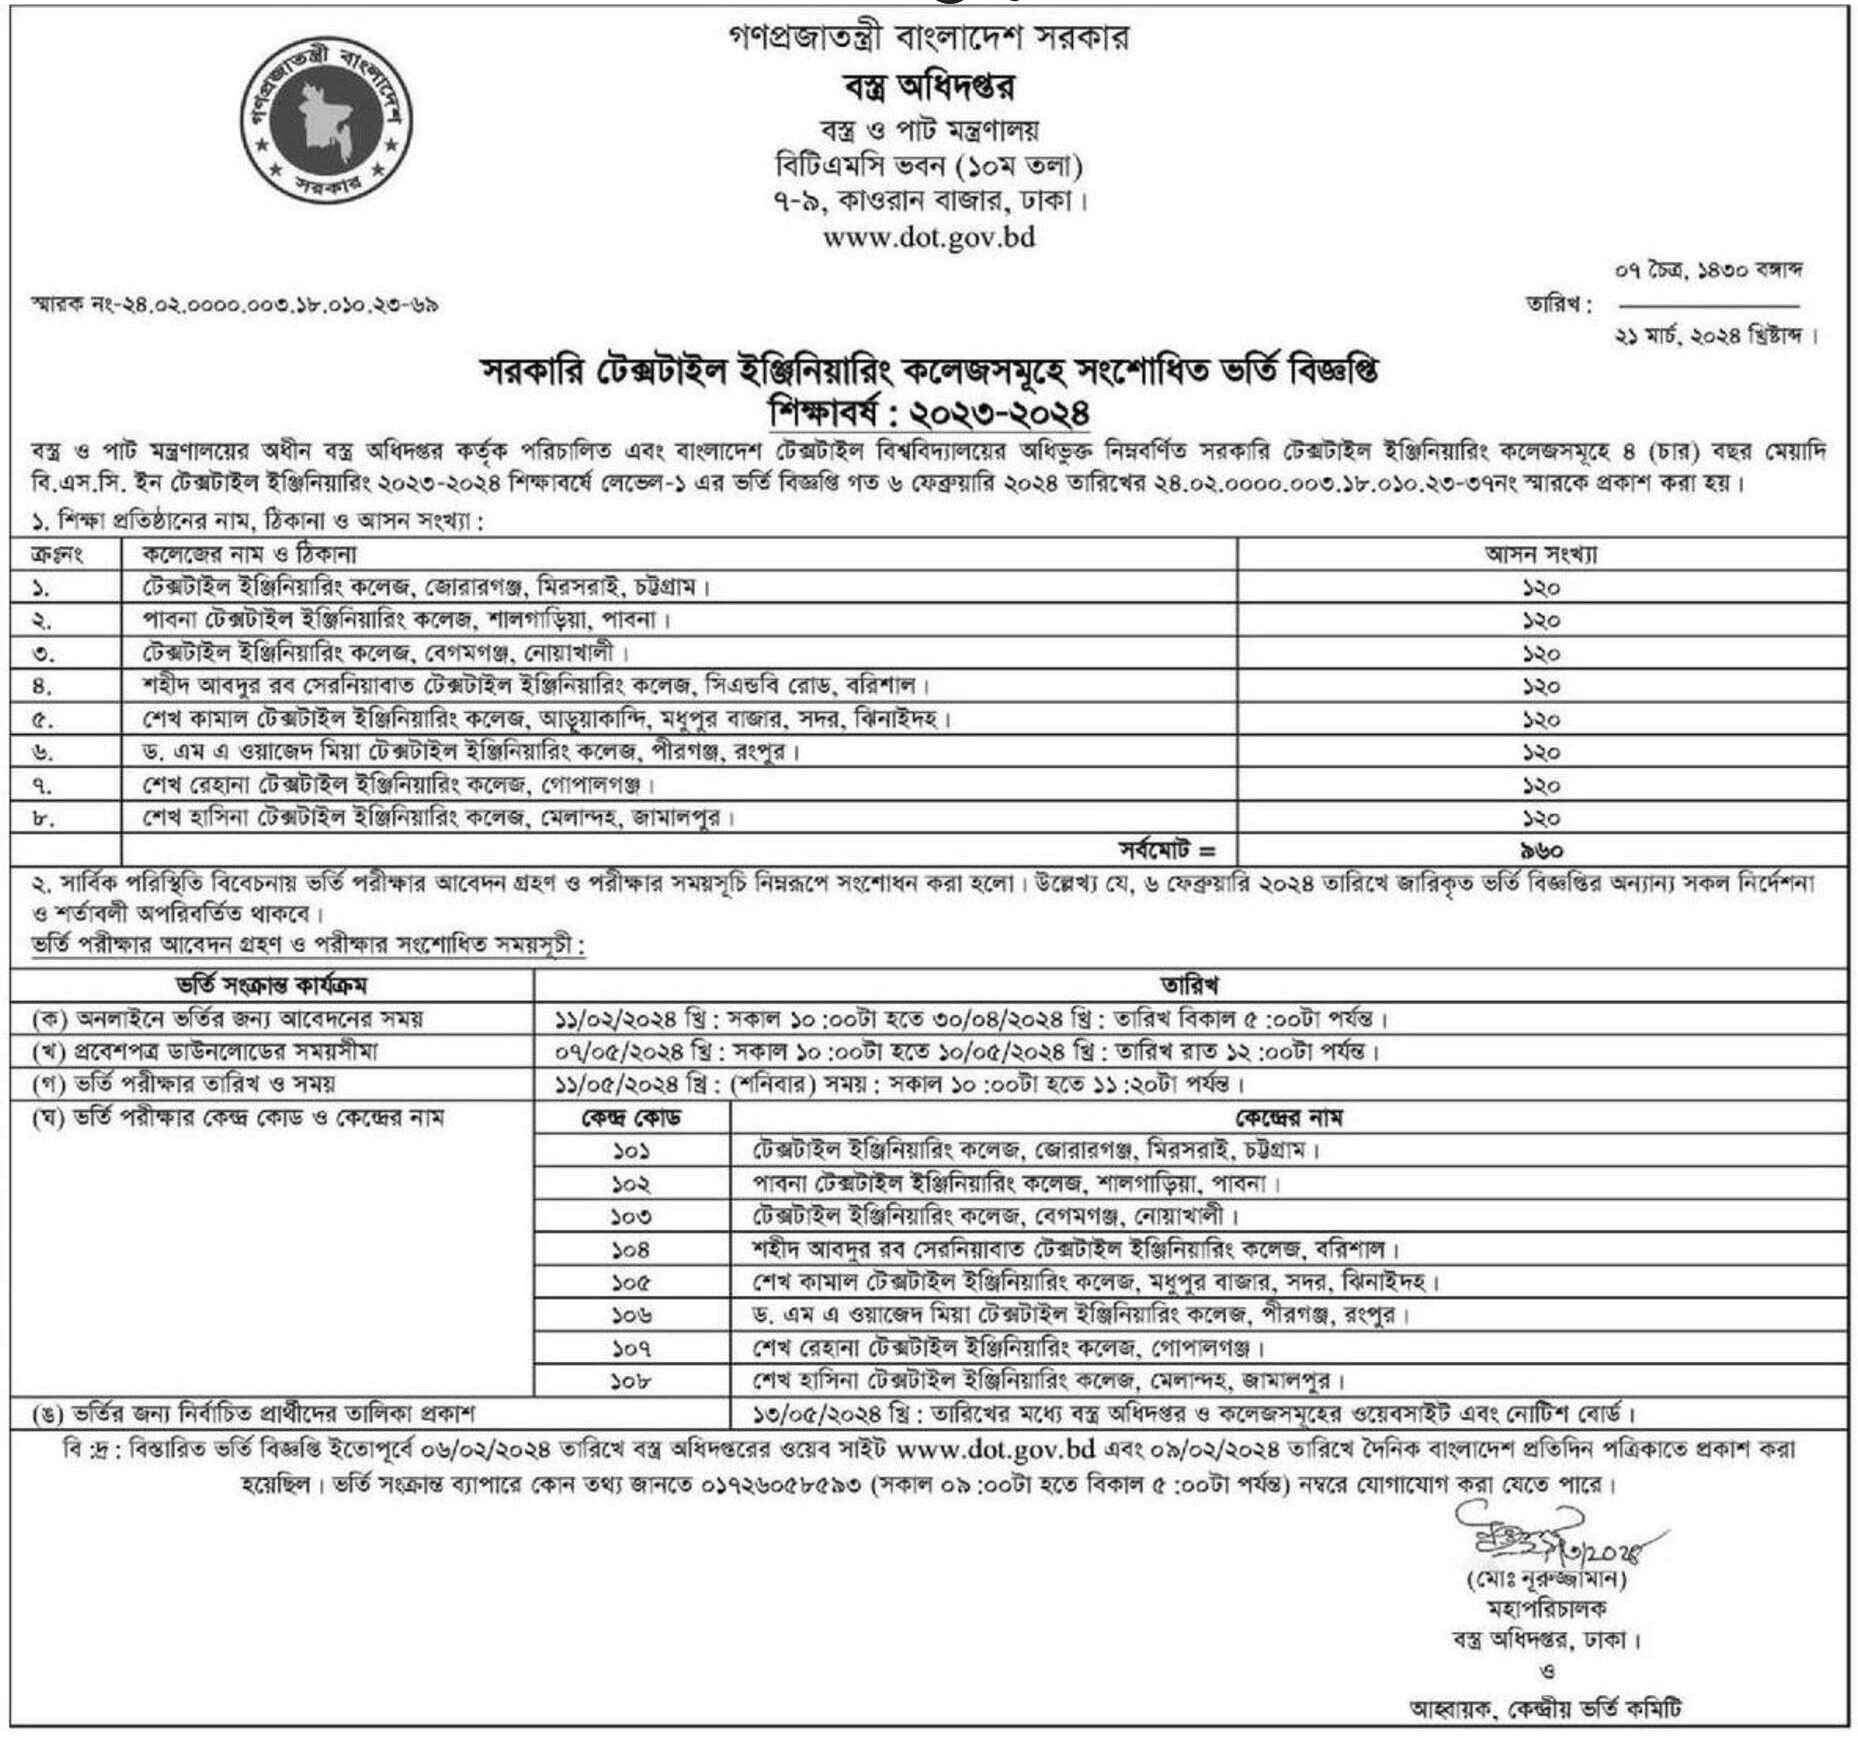 Bangladesh Textile Engineering College Admission Information